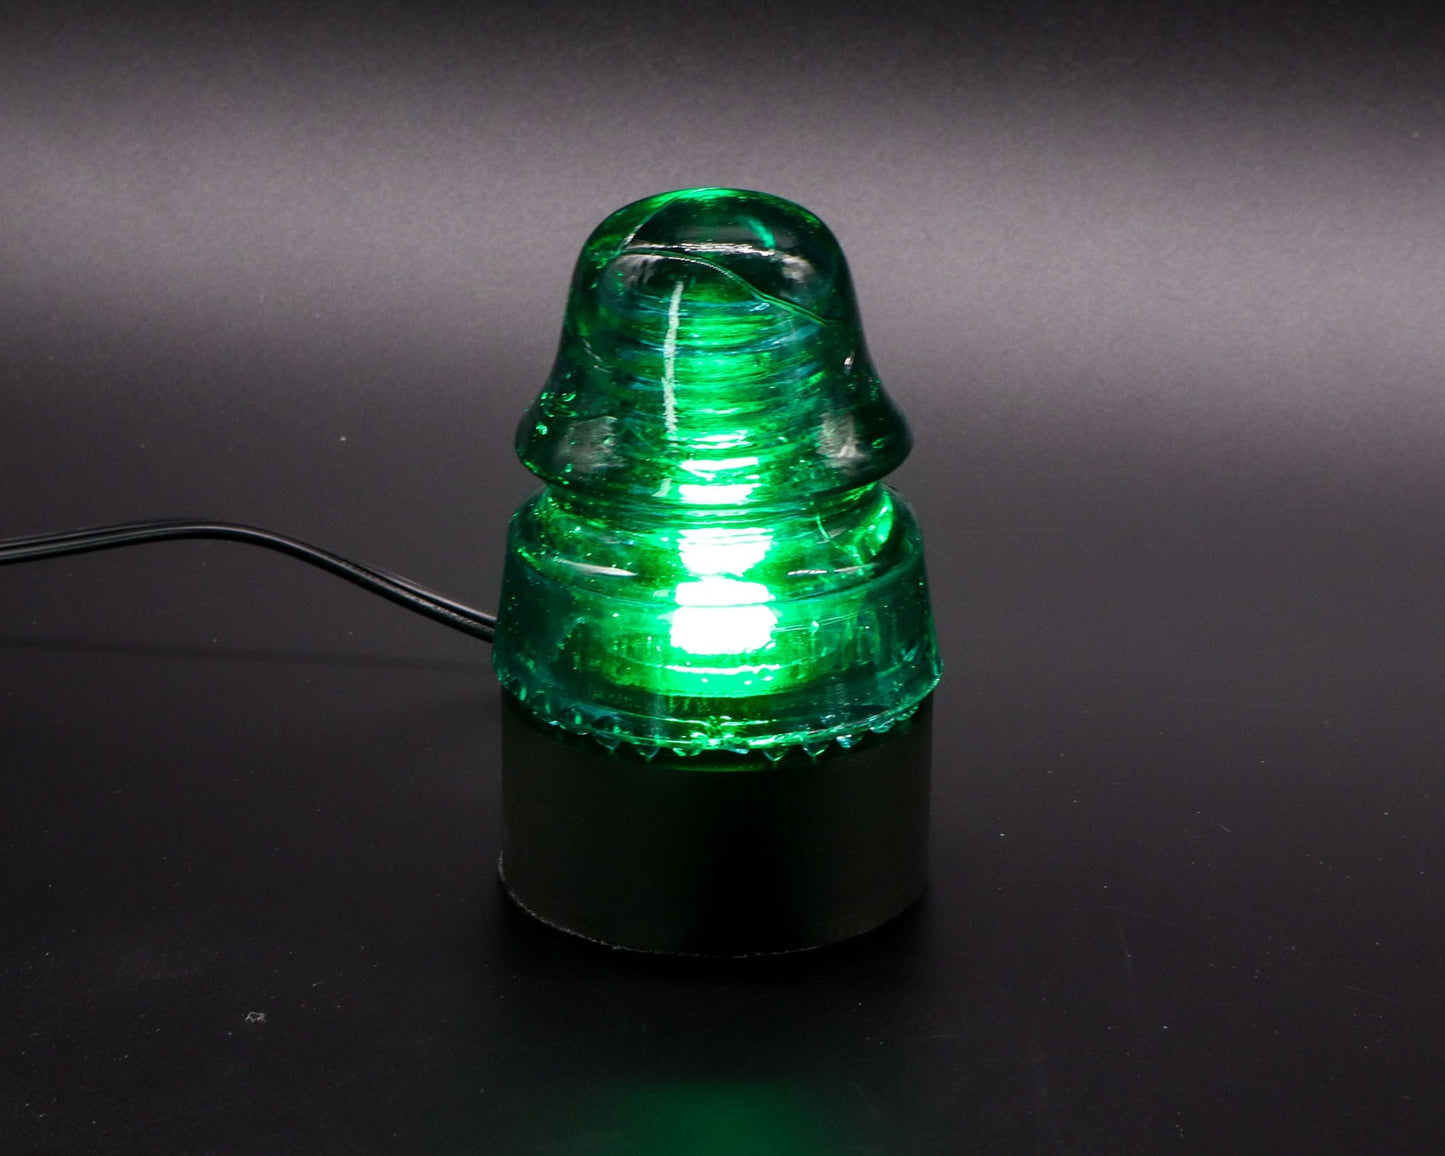 LightAndTimeArt Lamp base Lamp Base for "Brookfield CD 162" Glass Insulators, Industrial Lighting, Man Cave Decor